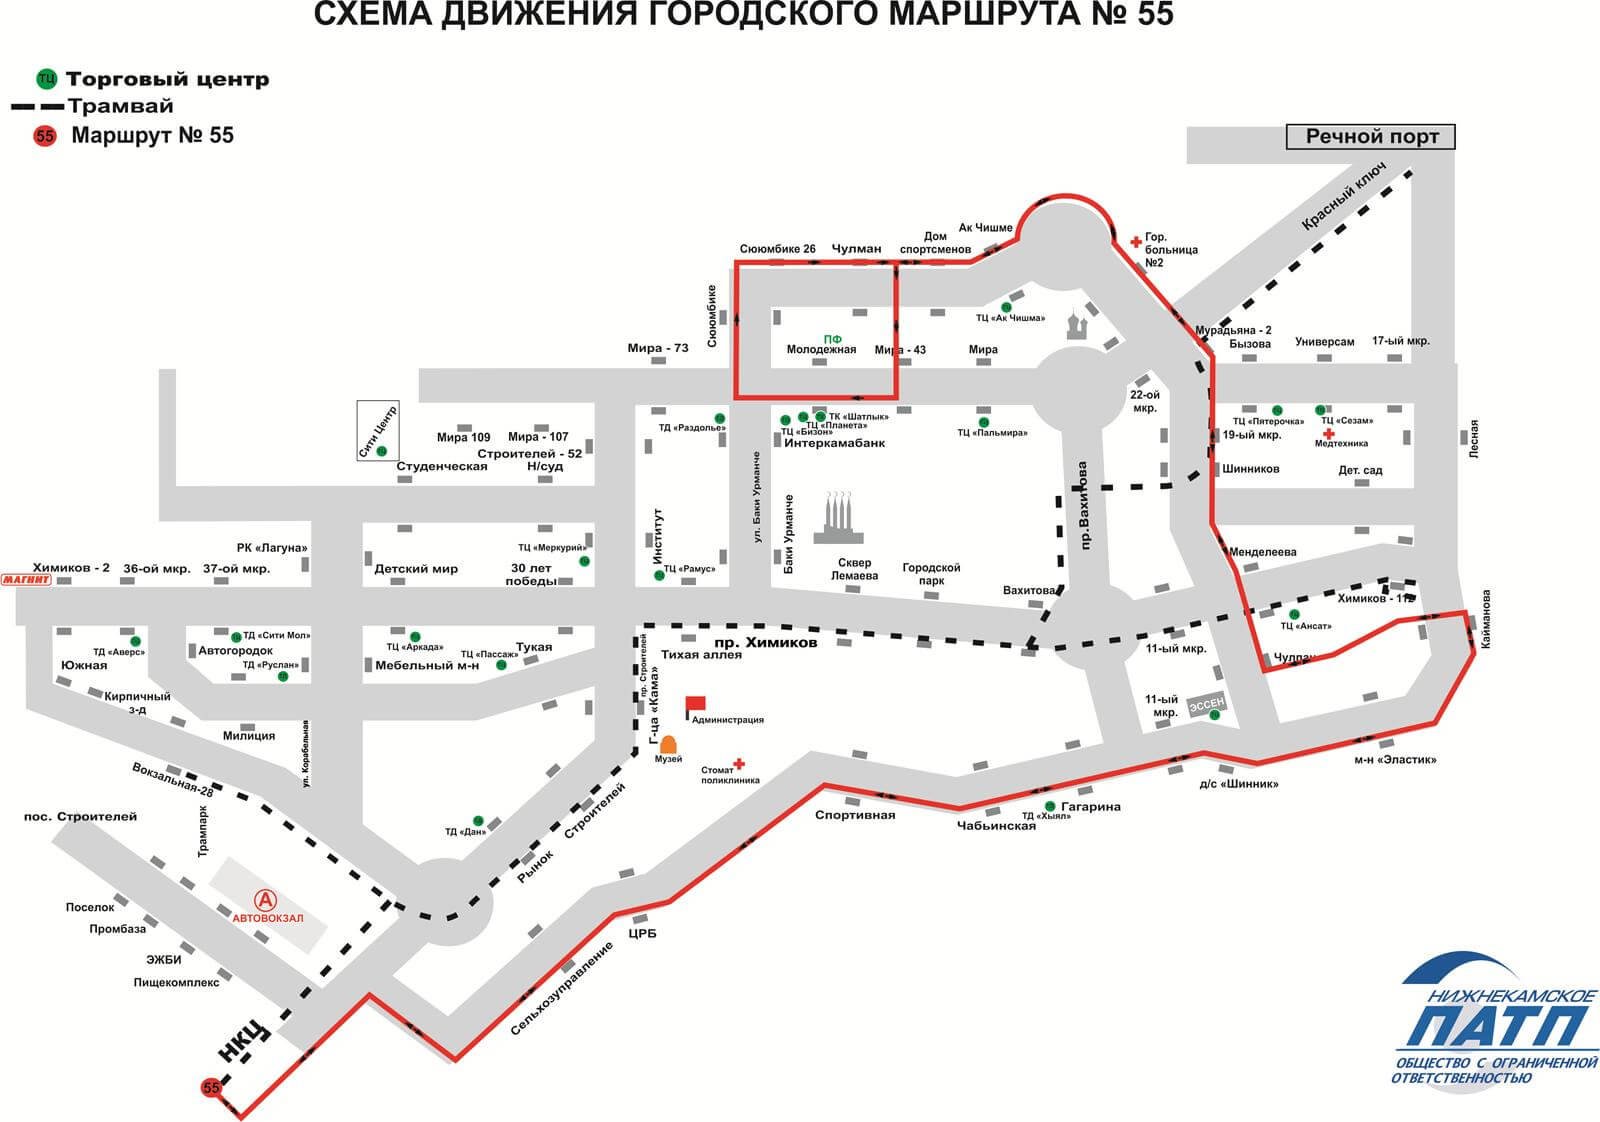 НПАТП маршруты схема 55 маршрута 14.12.2016